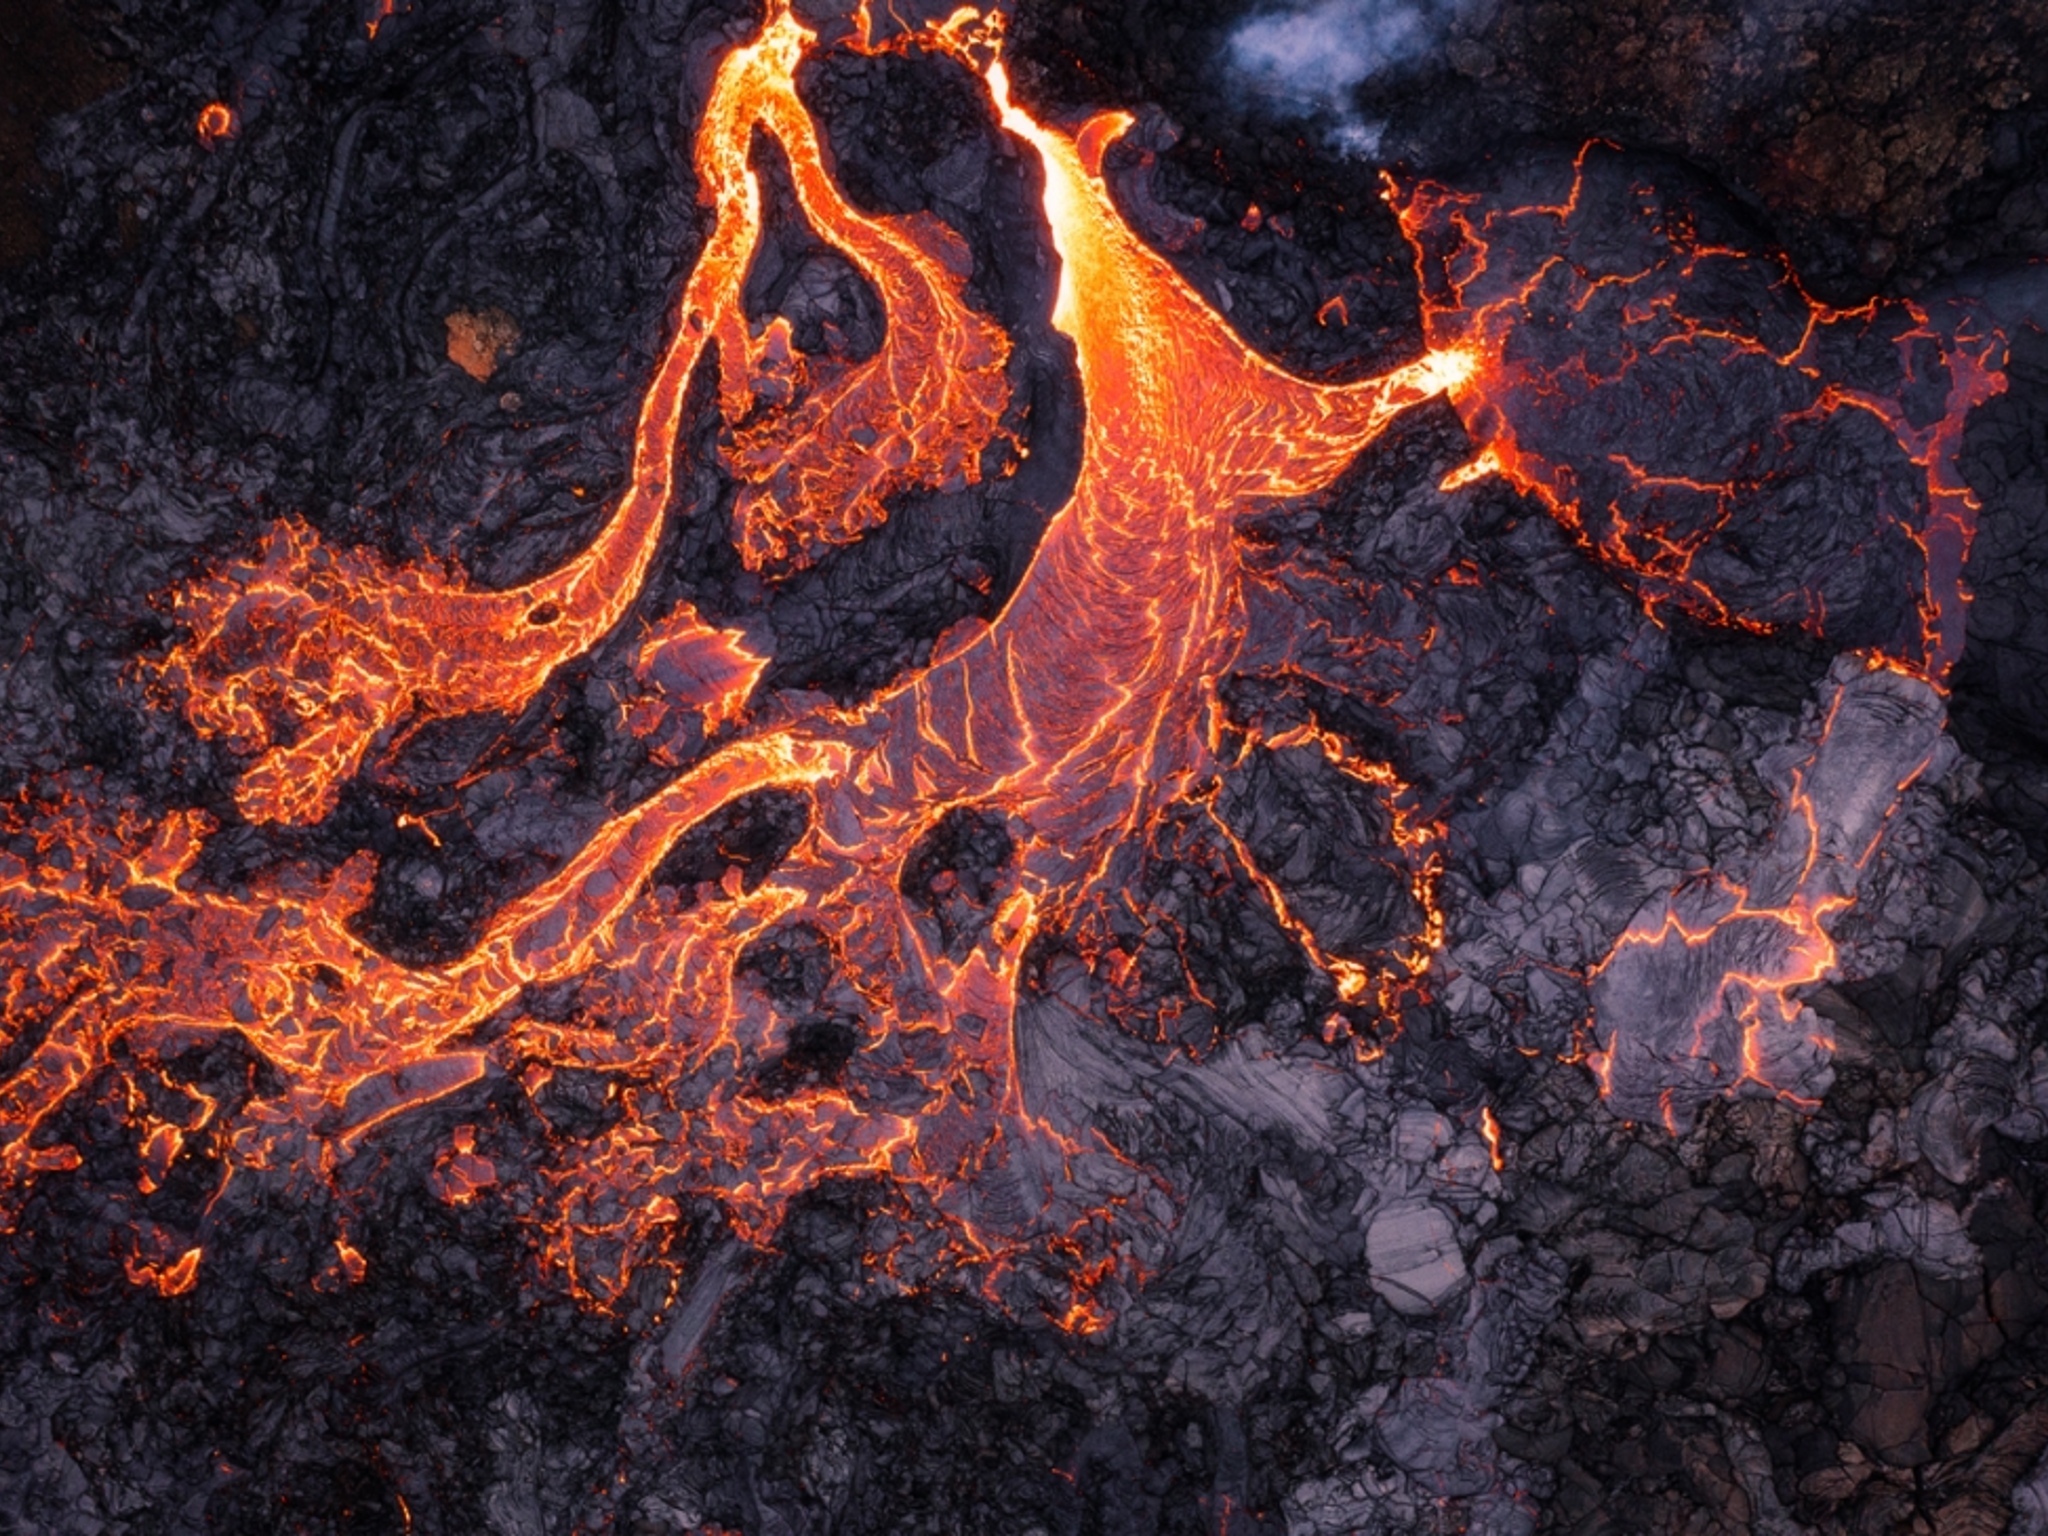 Molten lava from a volcano